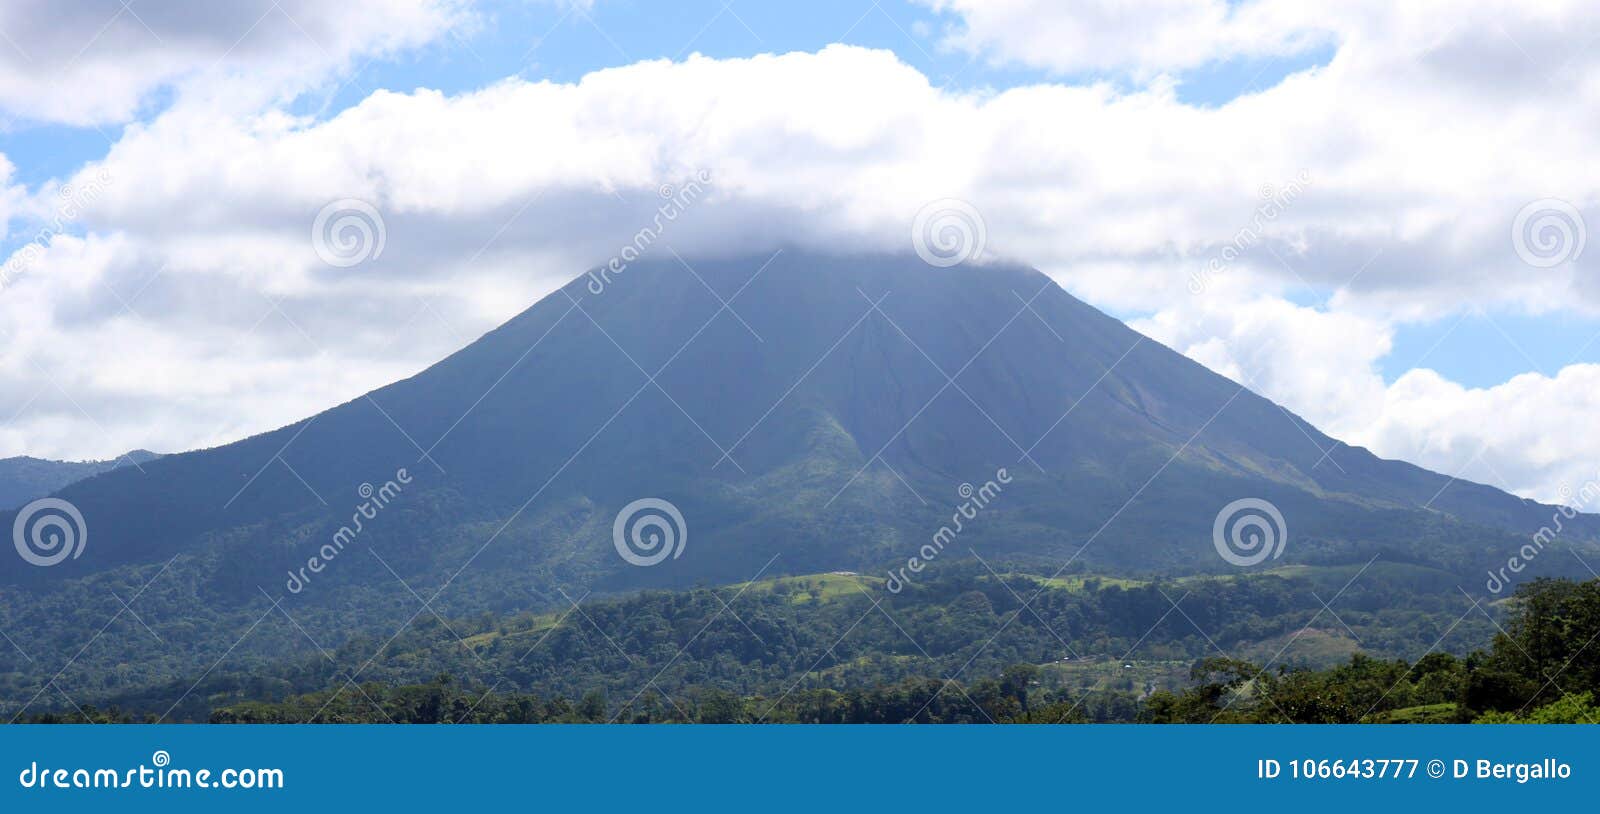 arenal jungle volcano in costa rica central america volcan active